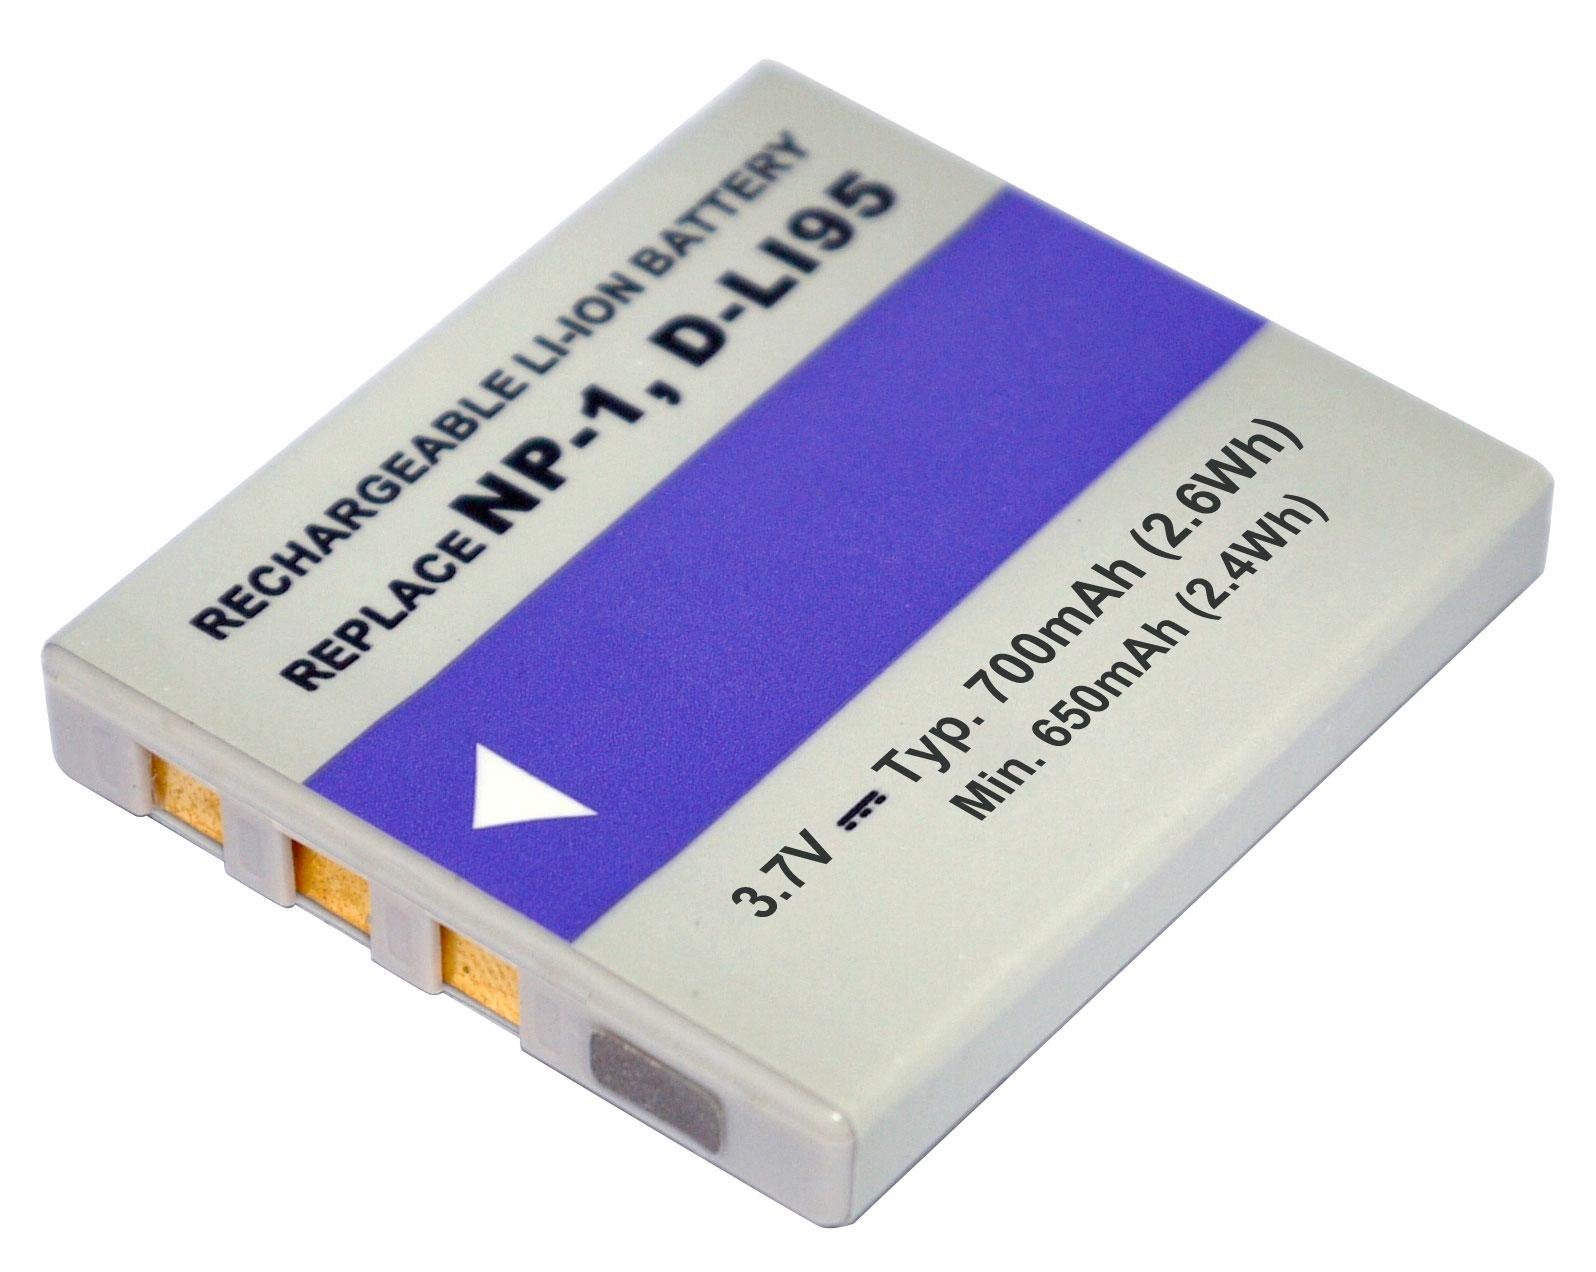 PowerSmart DKN004.533 Kamera-Akku Ersatz für SAMSUNG SLB-0837, Digimax i6 PMP, Digimax L50, Digimax L60, Digimax L80, i70, i70S, L73, L700, L700S, NV3, NV5, NV7, NV7 OPS Lithium-ion (Li-ion) 700 mAh (3,7 V), Ersatzbatterie